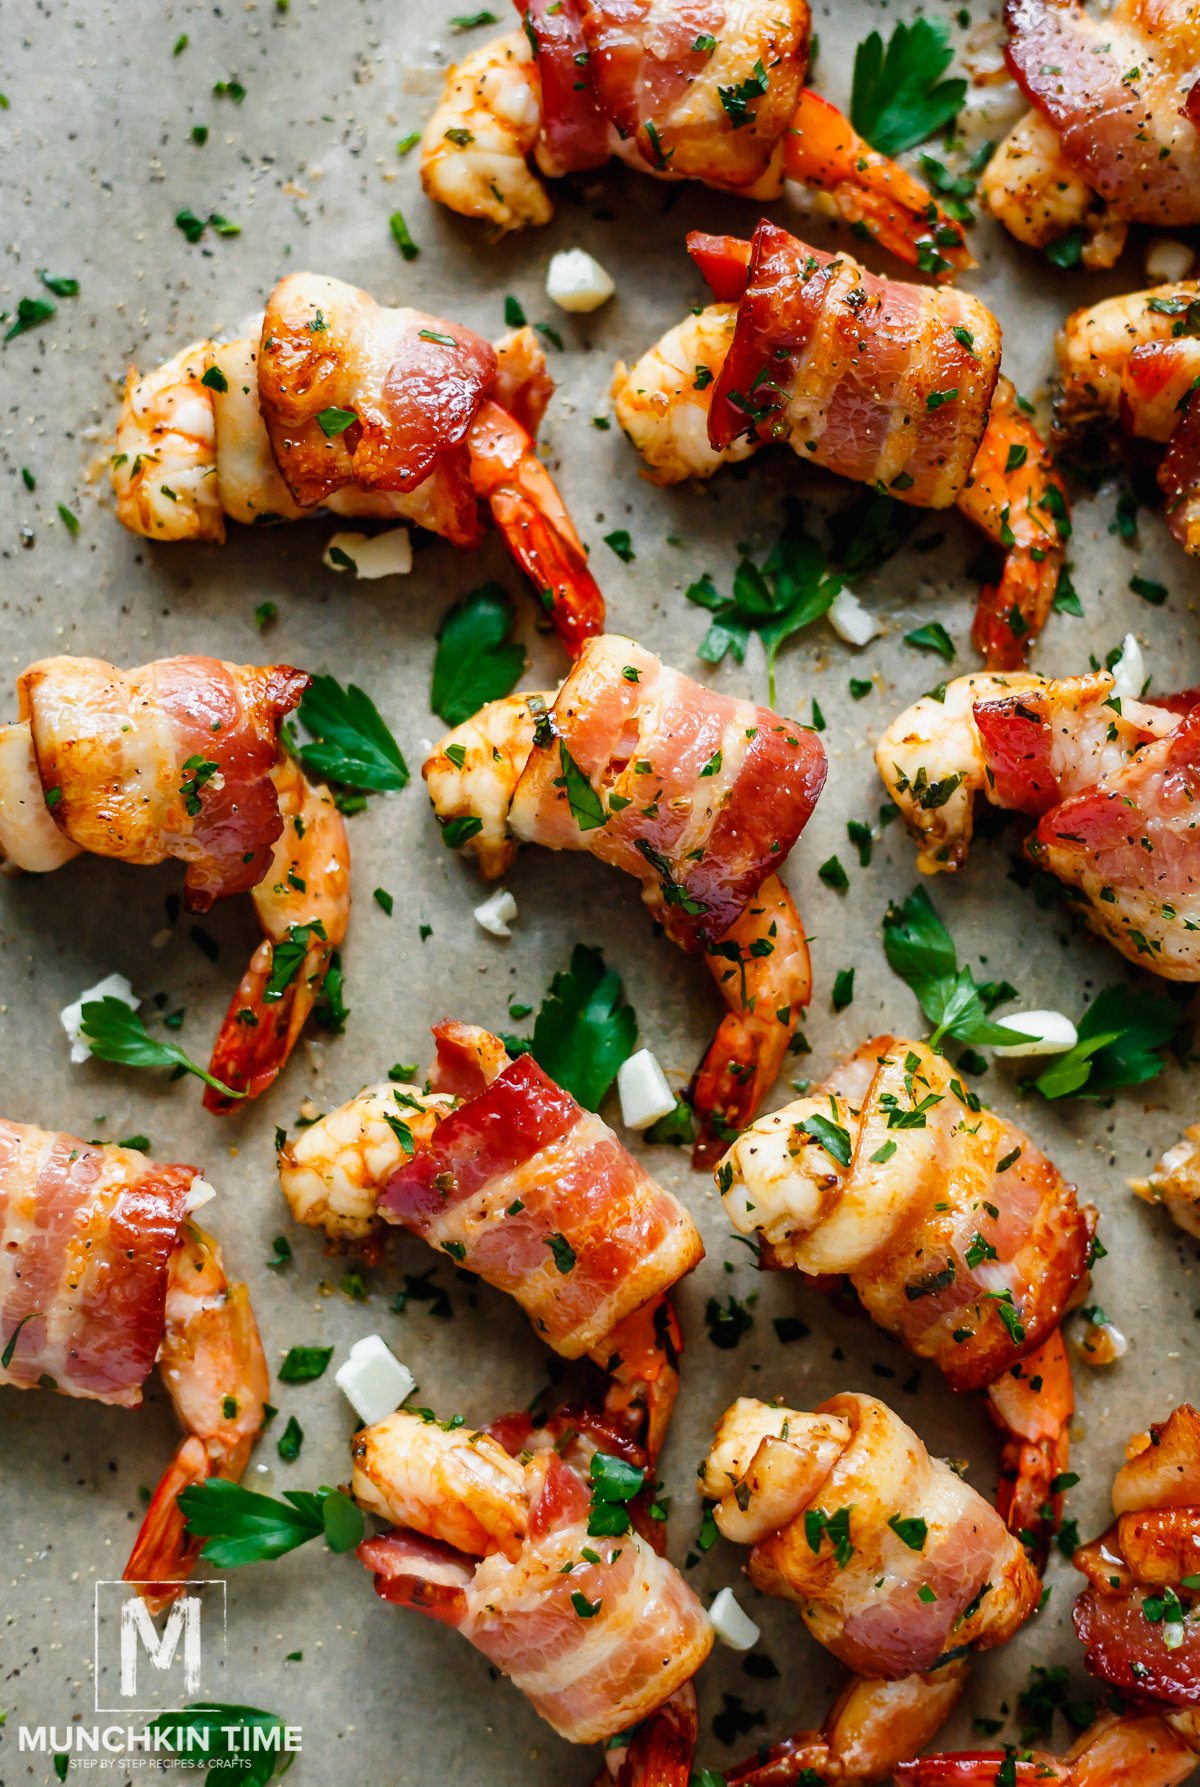 How long do I bake bacon-wrapped shrimp?